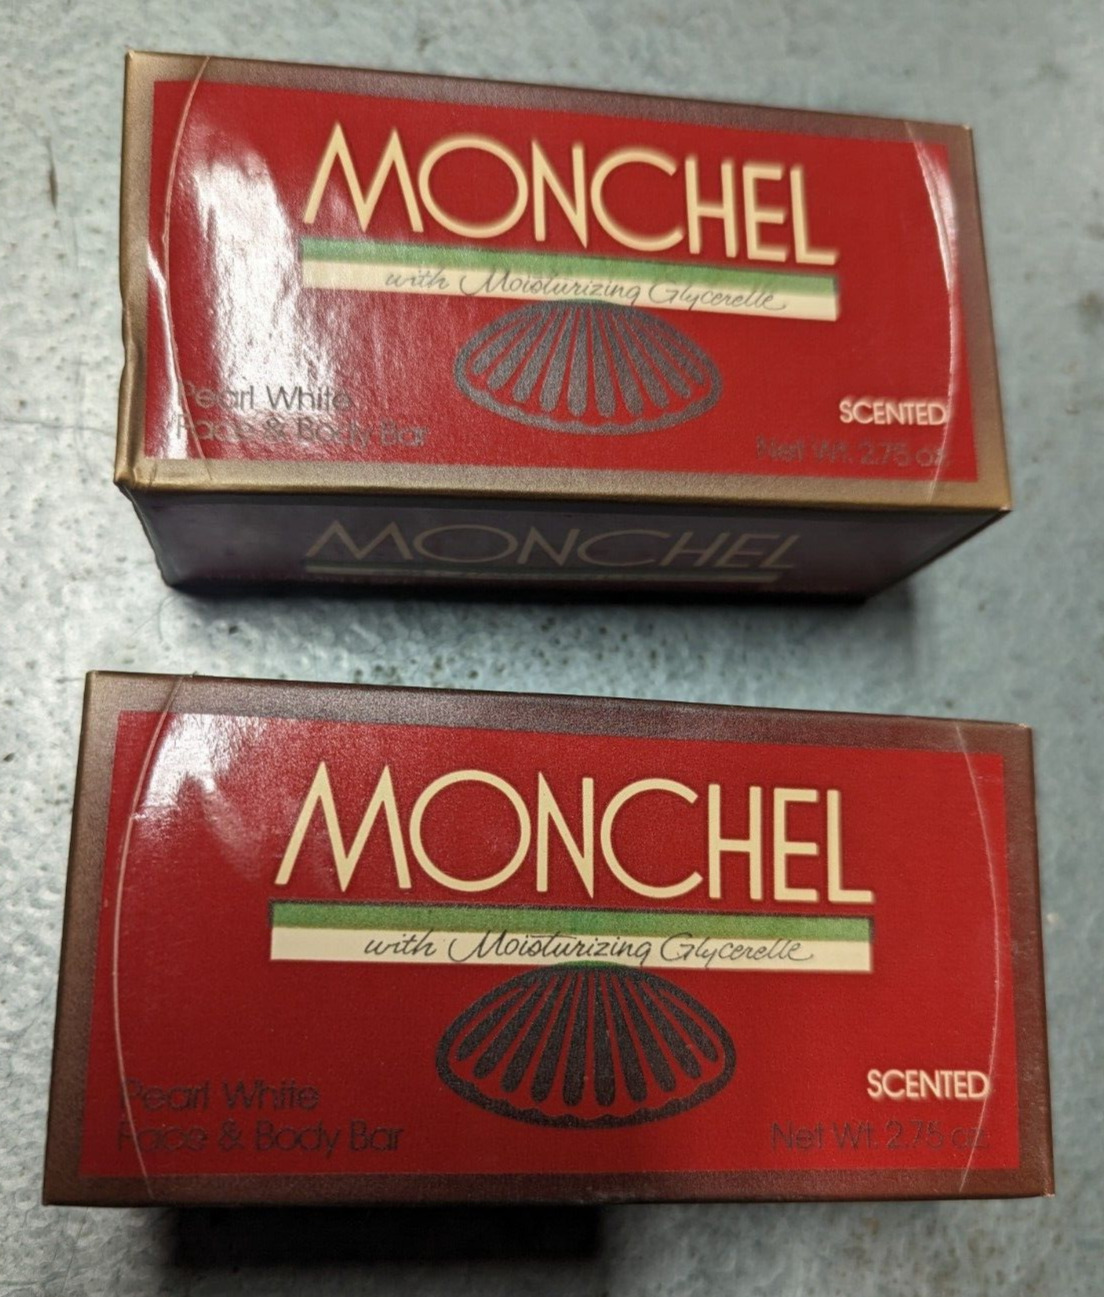 2 Vintage 1982 MONCHEL Scented 3.5 oz. Bar Soap Unopened Proctor Gamble Shell